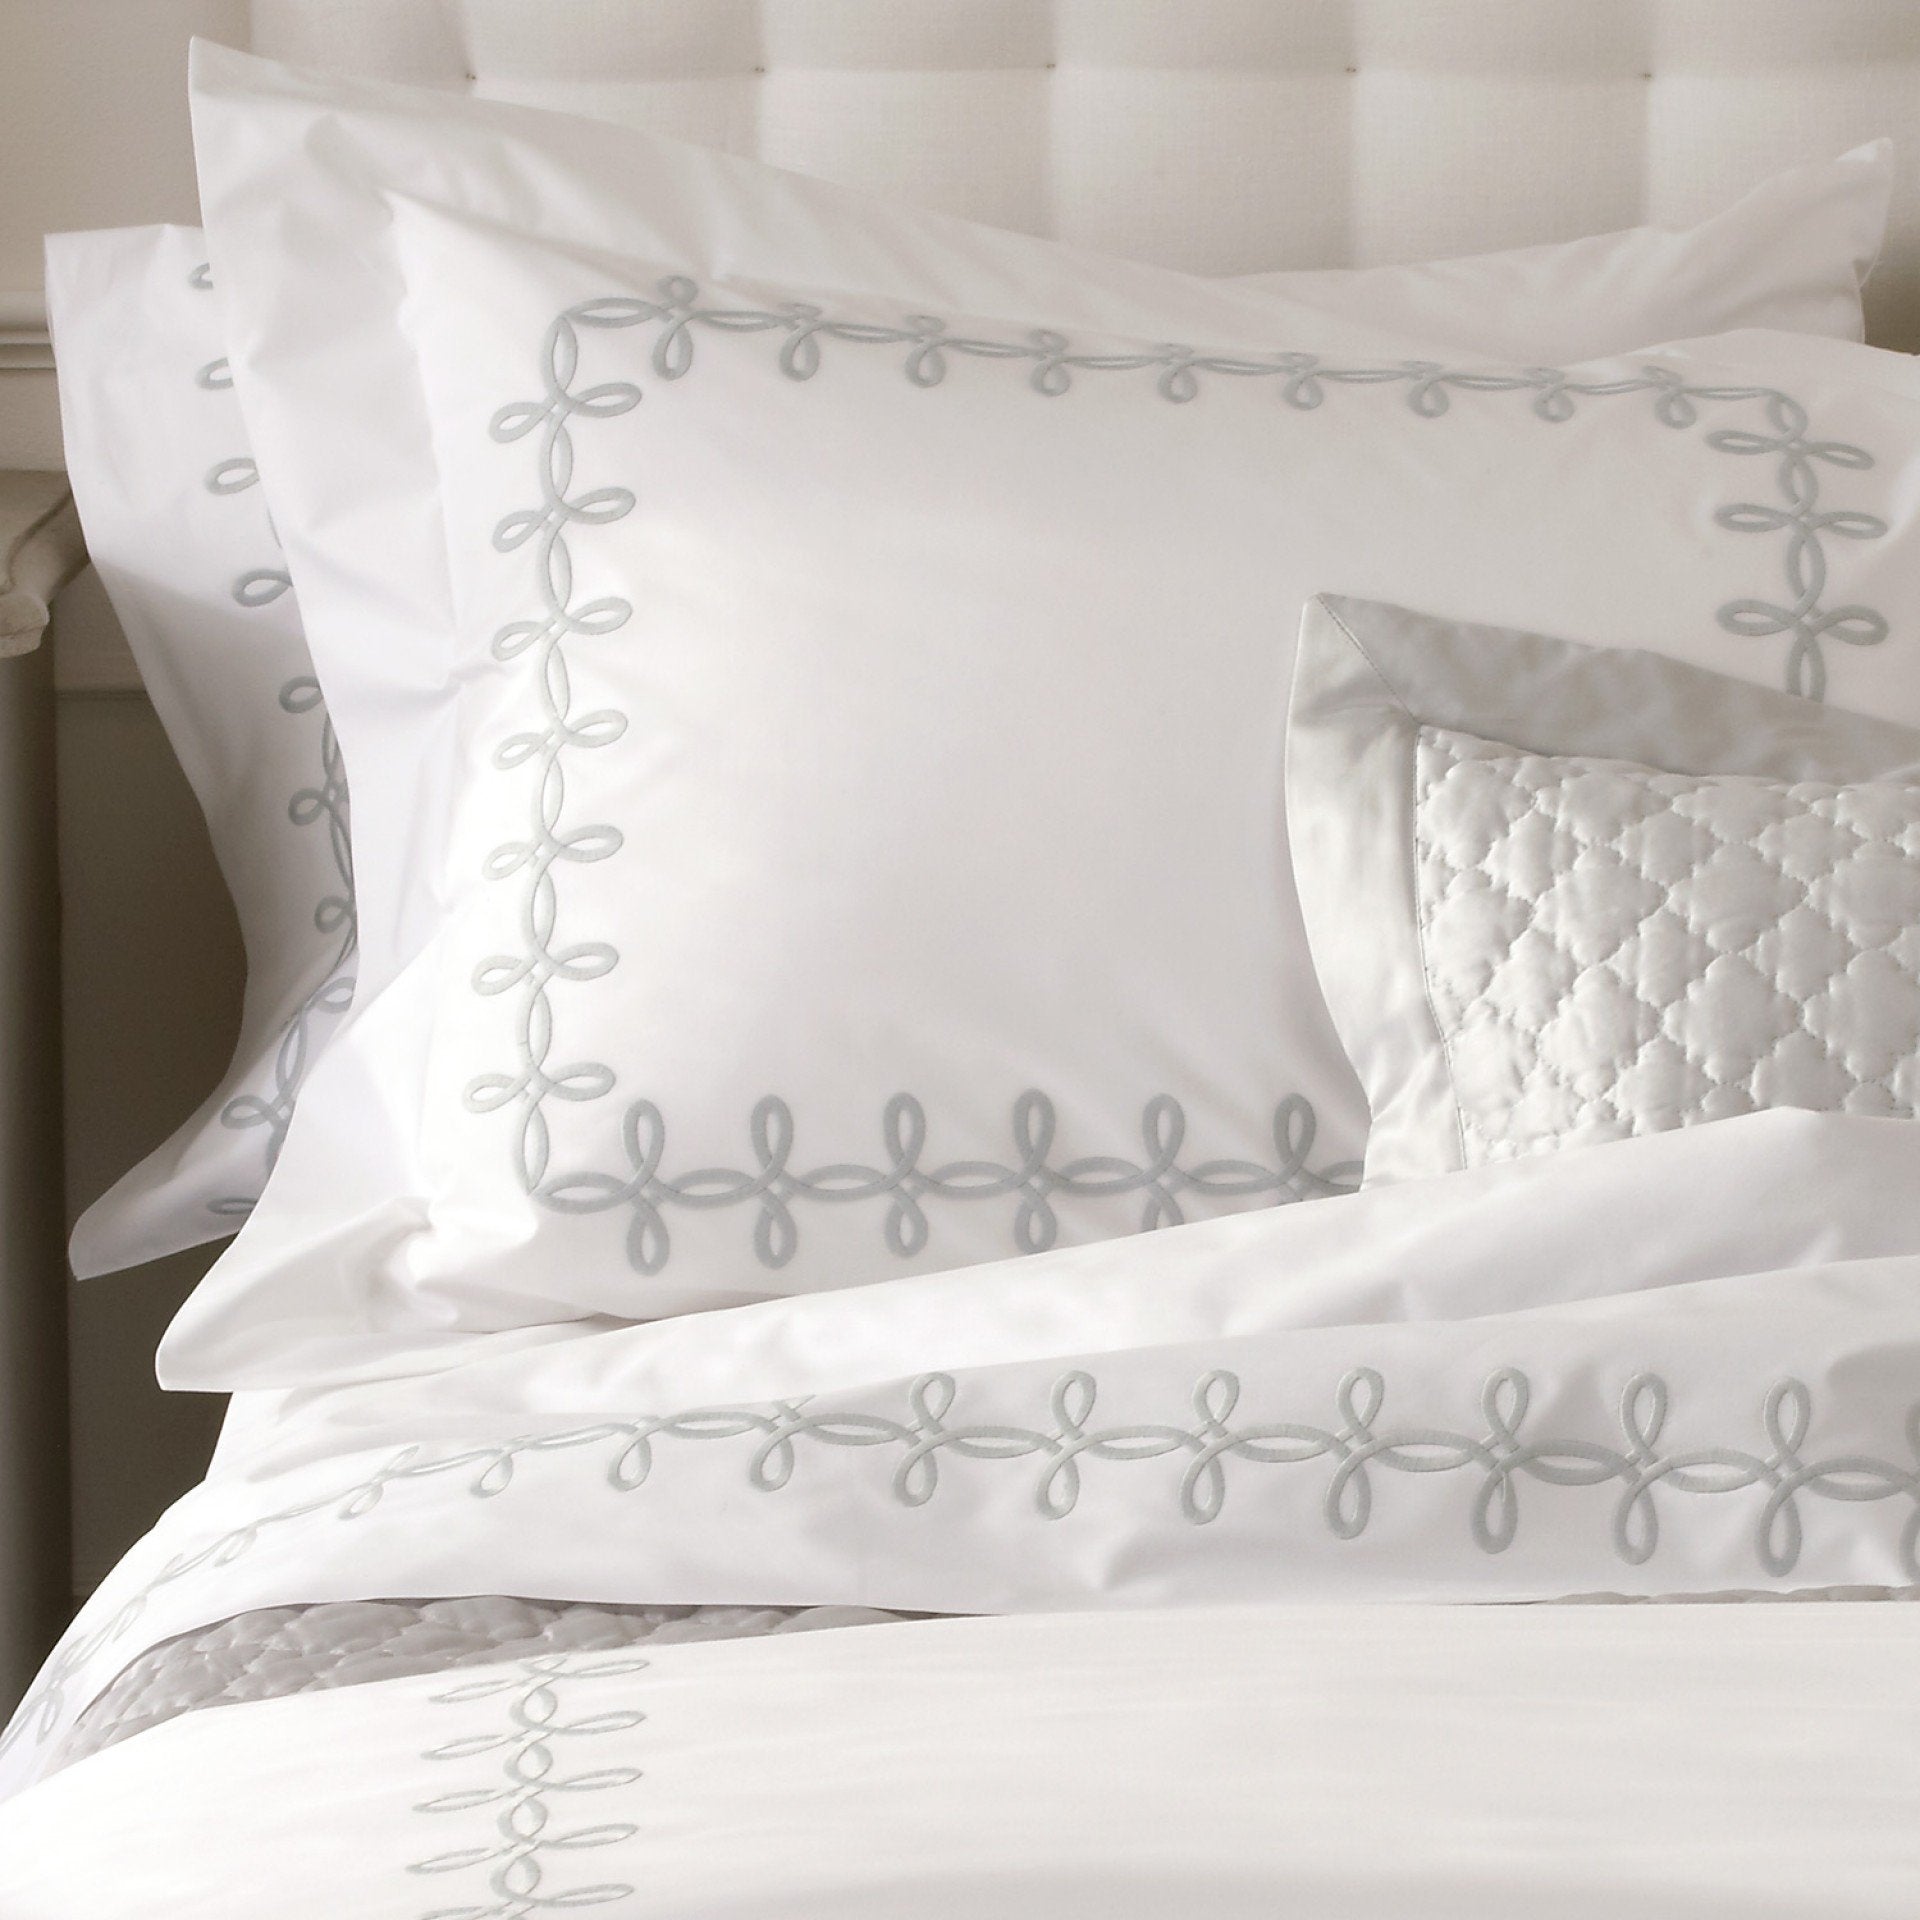 Fig Linens - Matouk Luxury Bed Linens - Gordian Knot